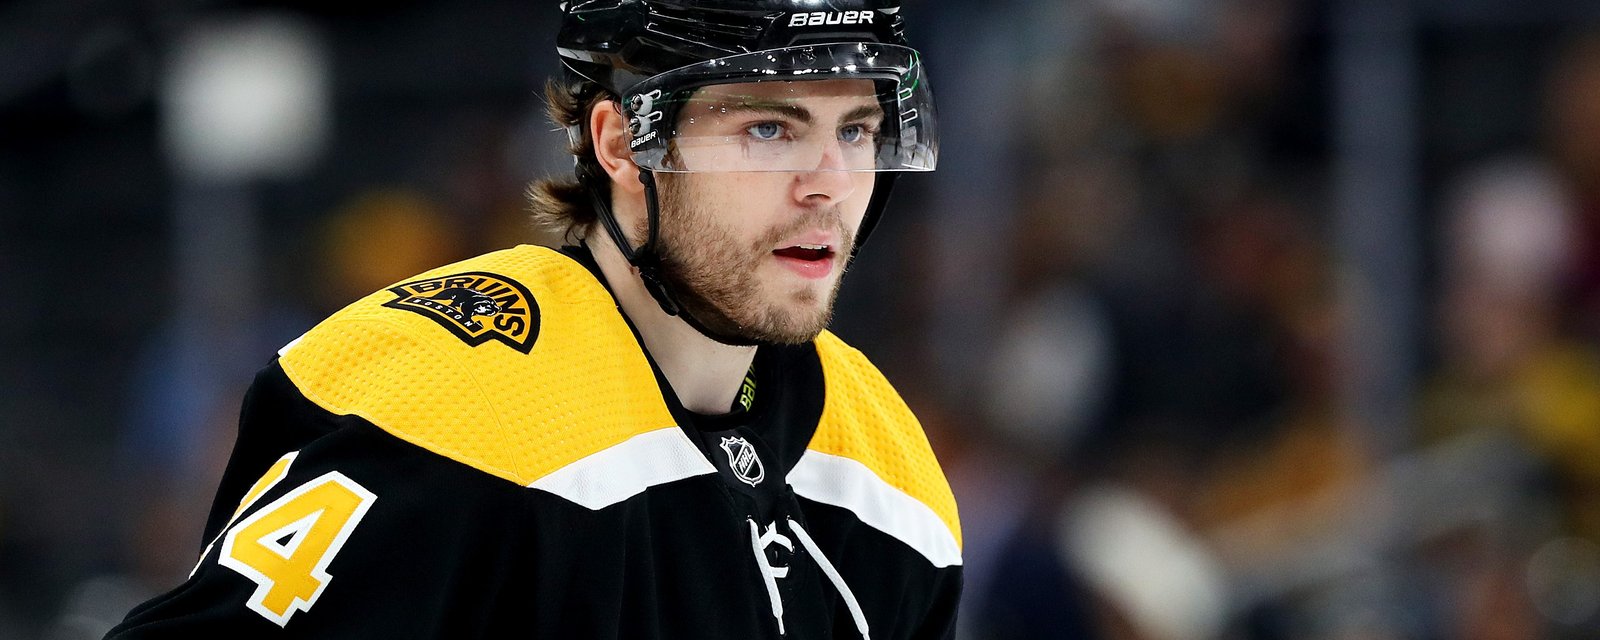 Bruins are scared of potential Jake DeBrusk trade